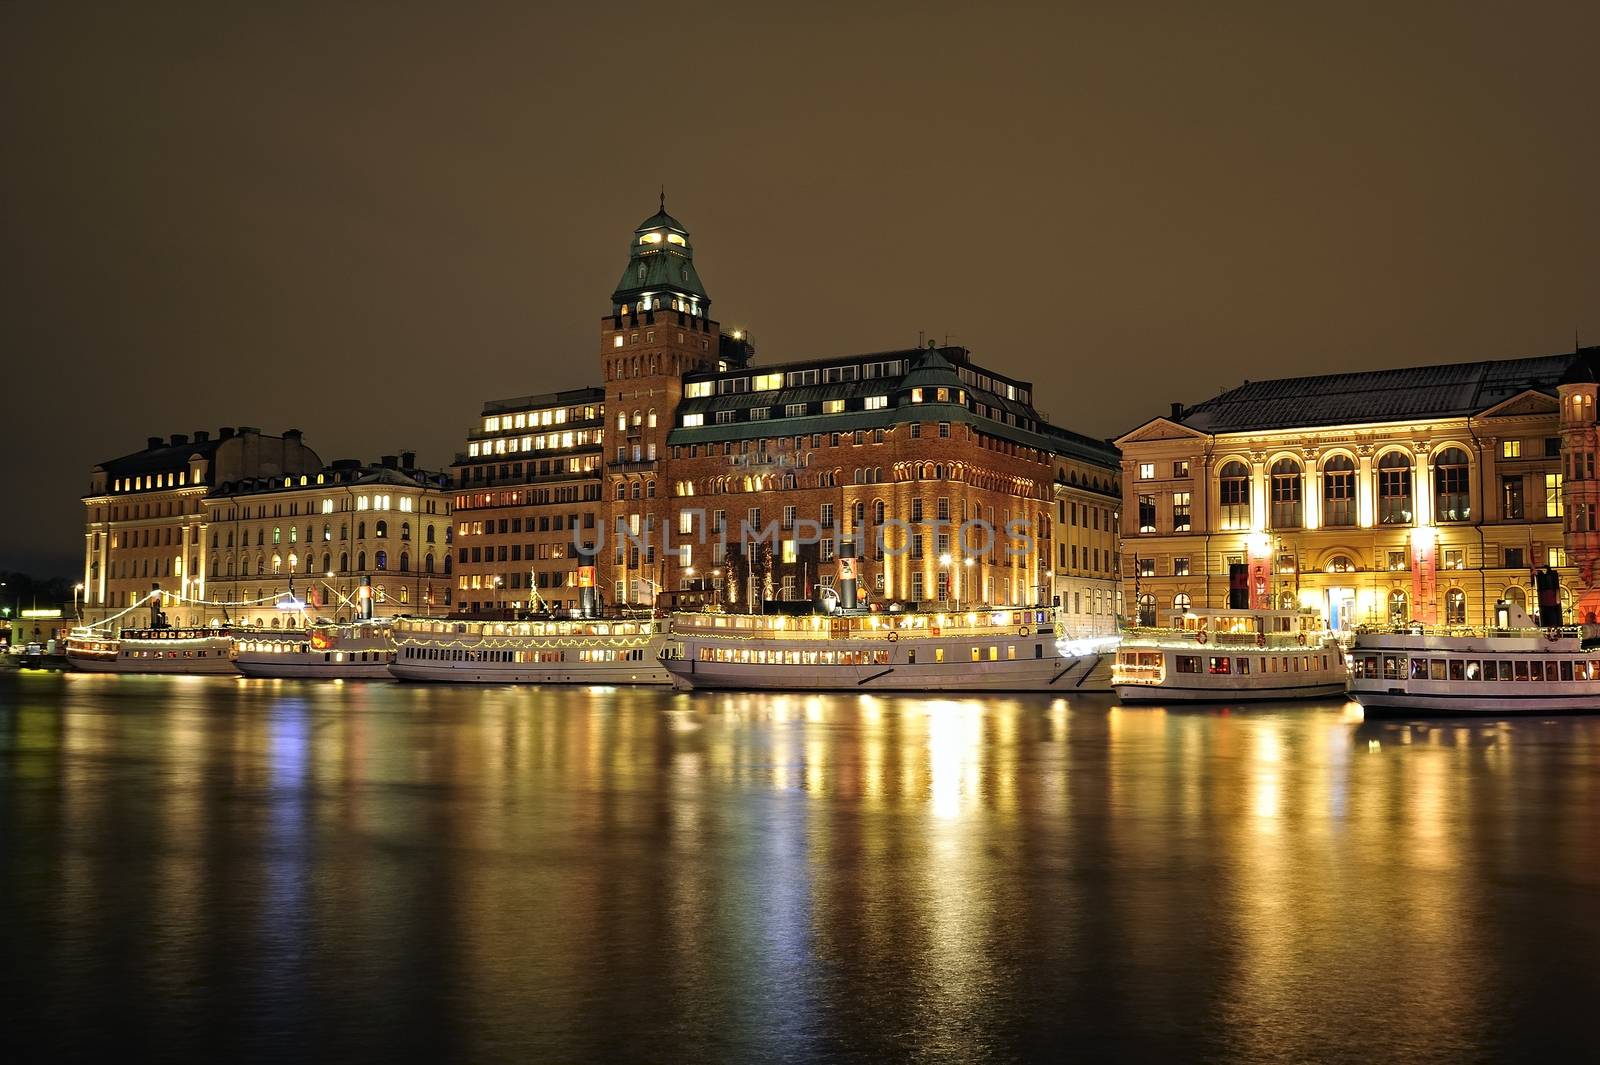 Night scenery of Stockholm, Sweden.